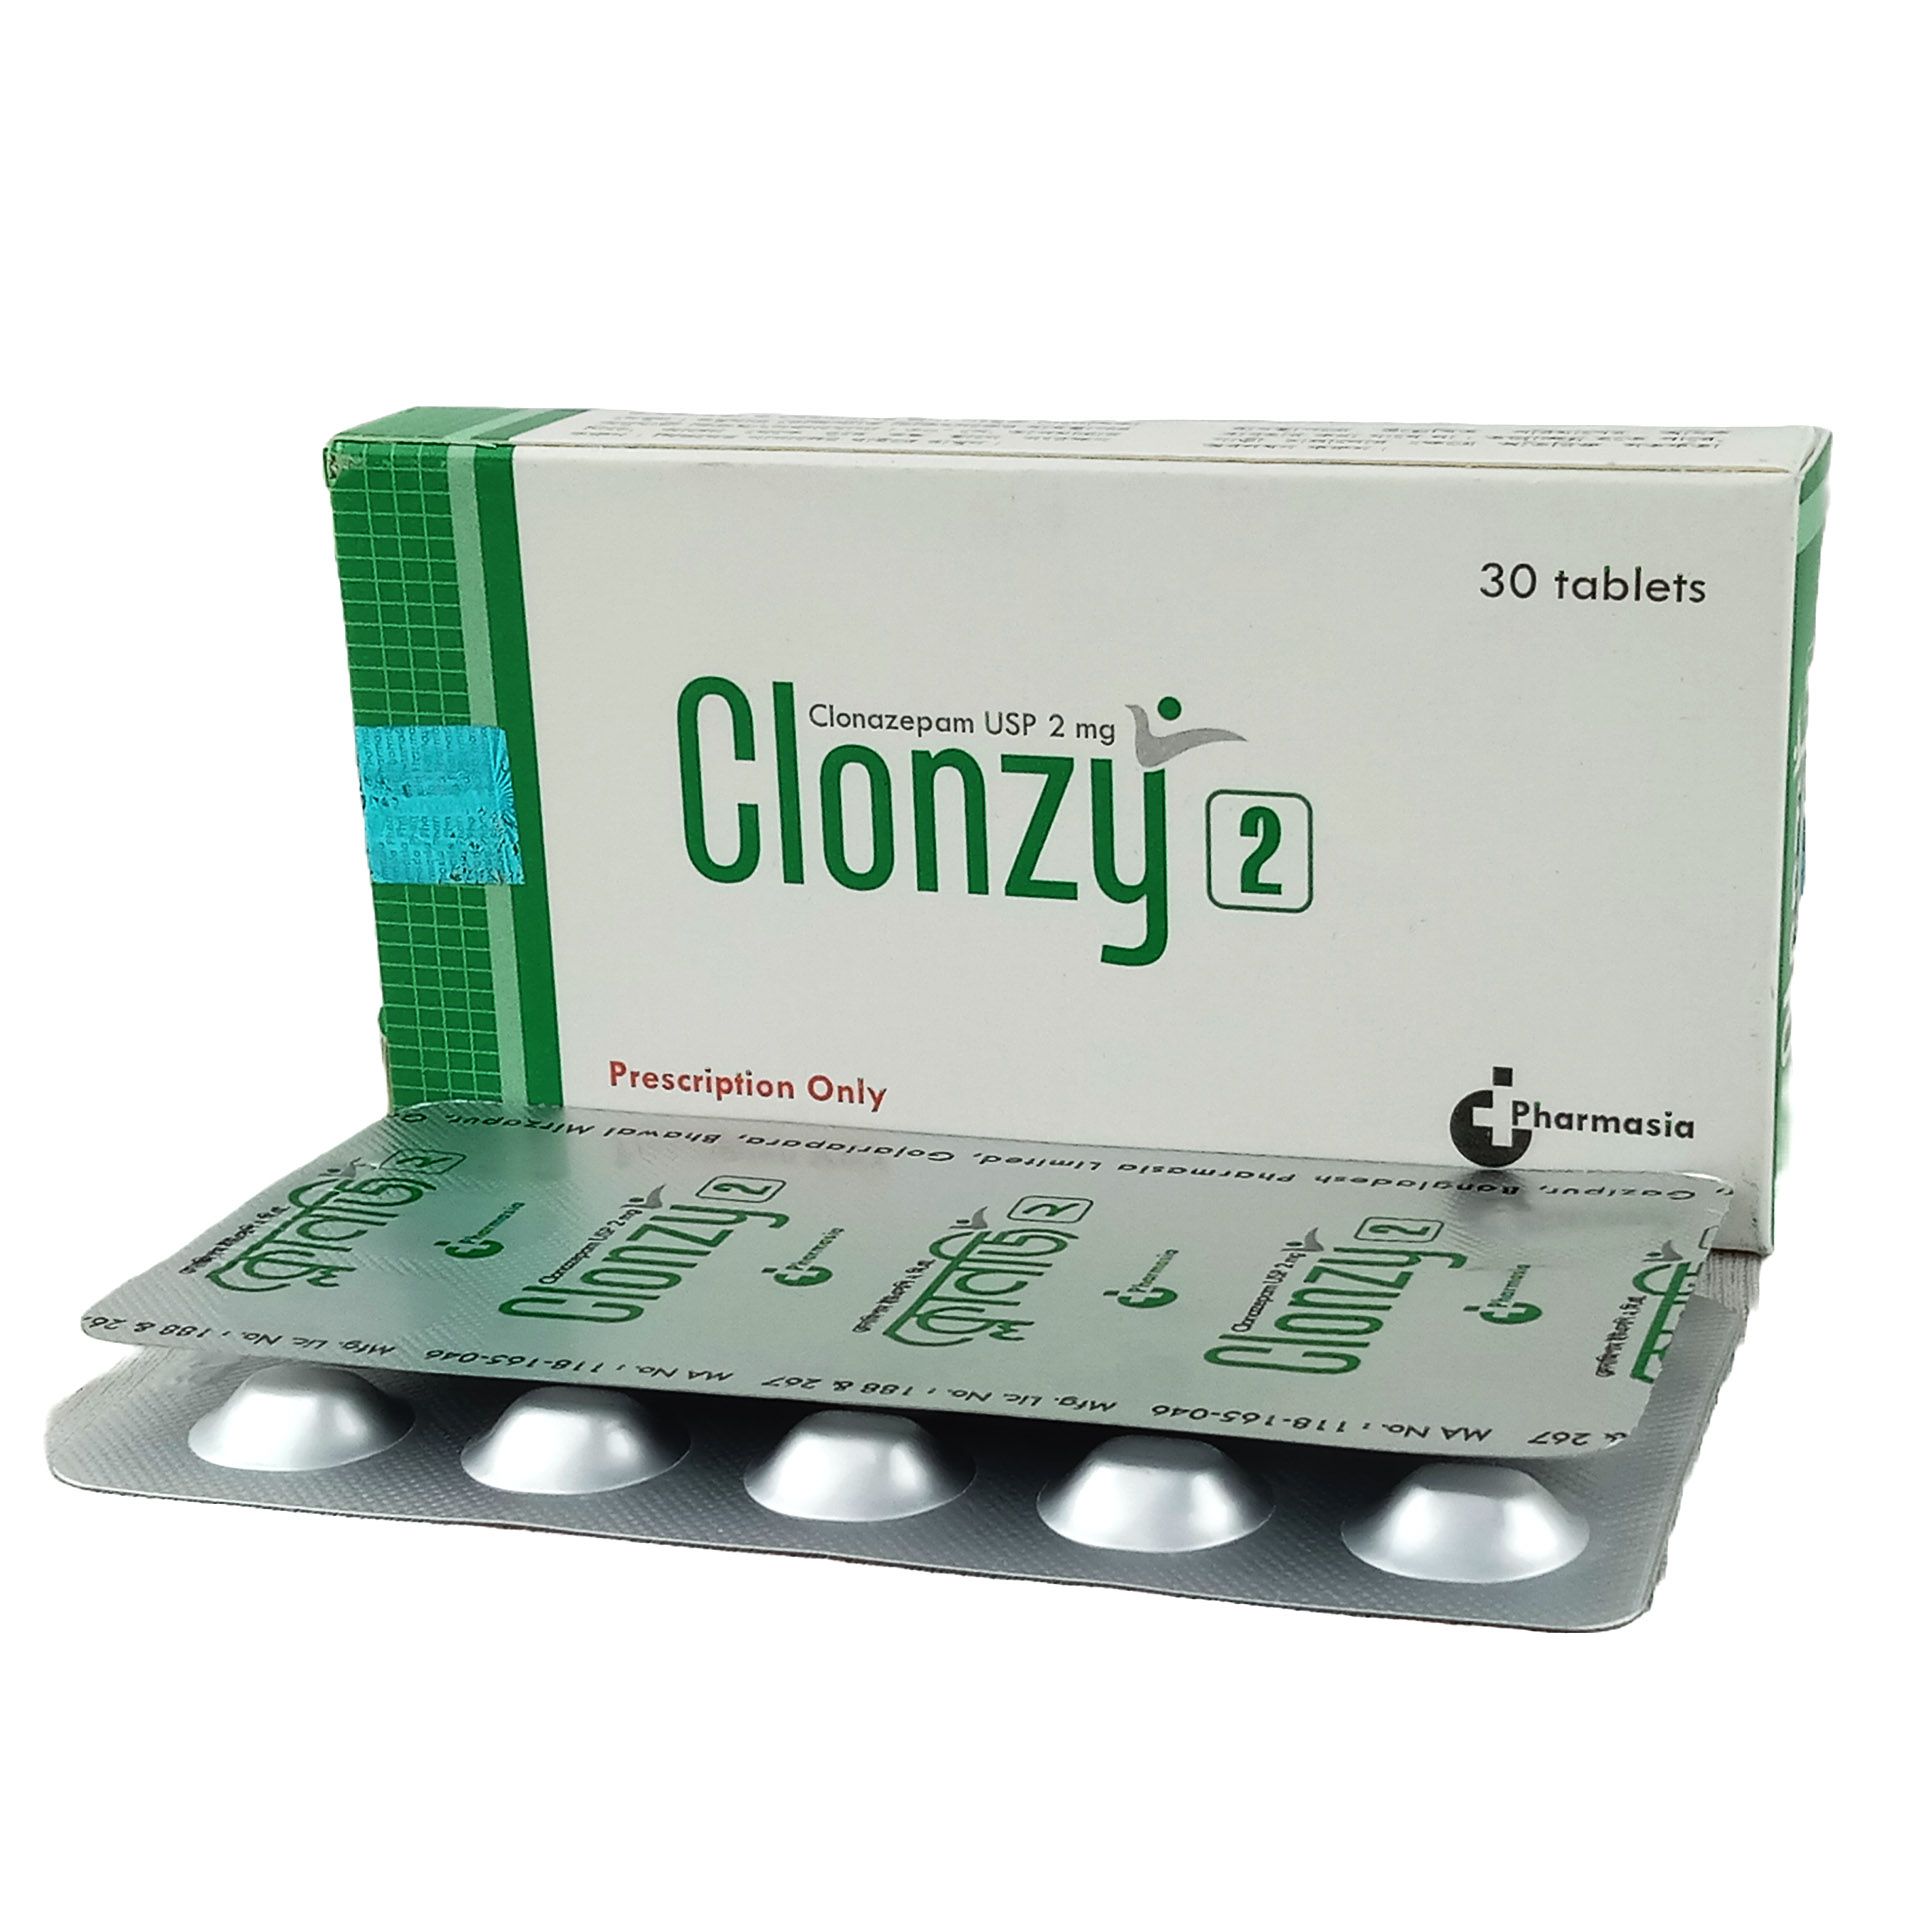 Clonzy 2mg Tablet